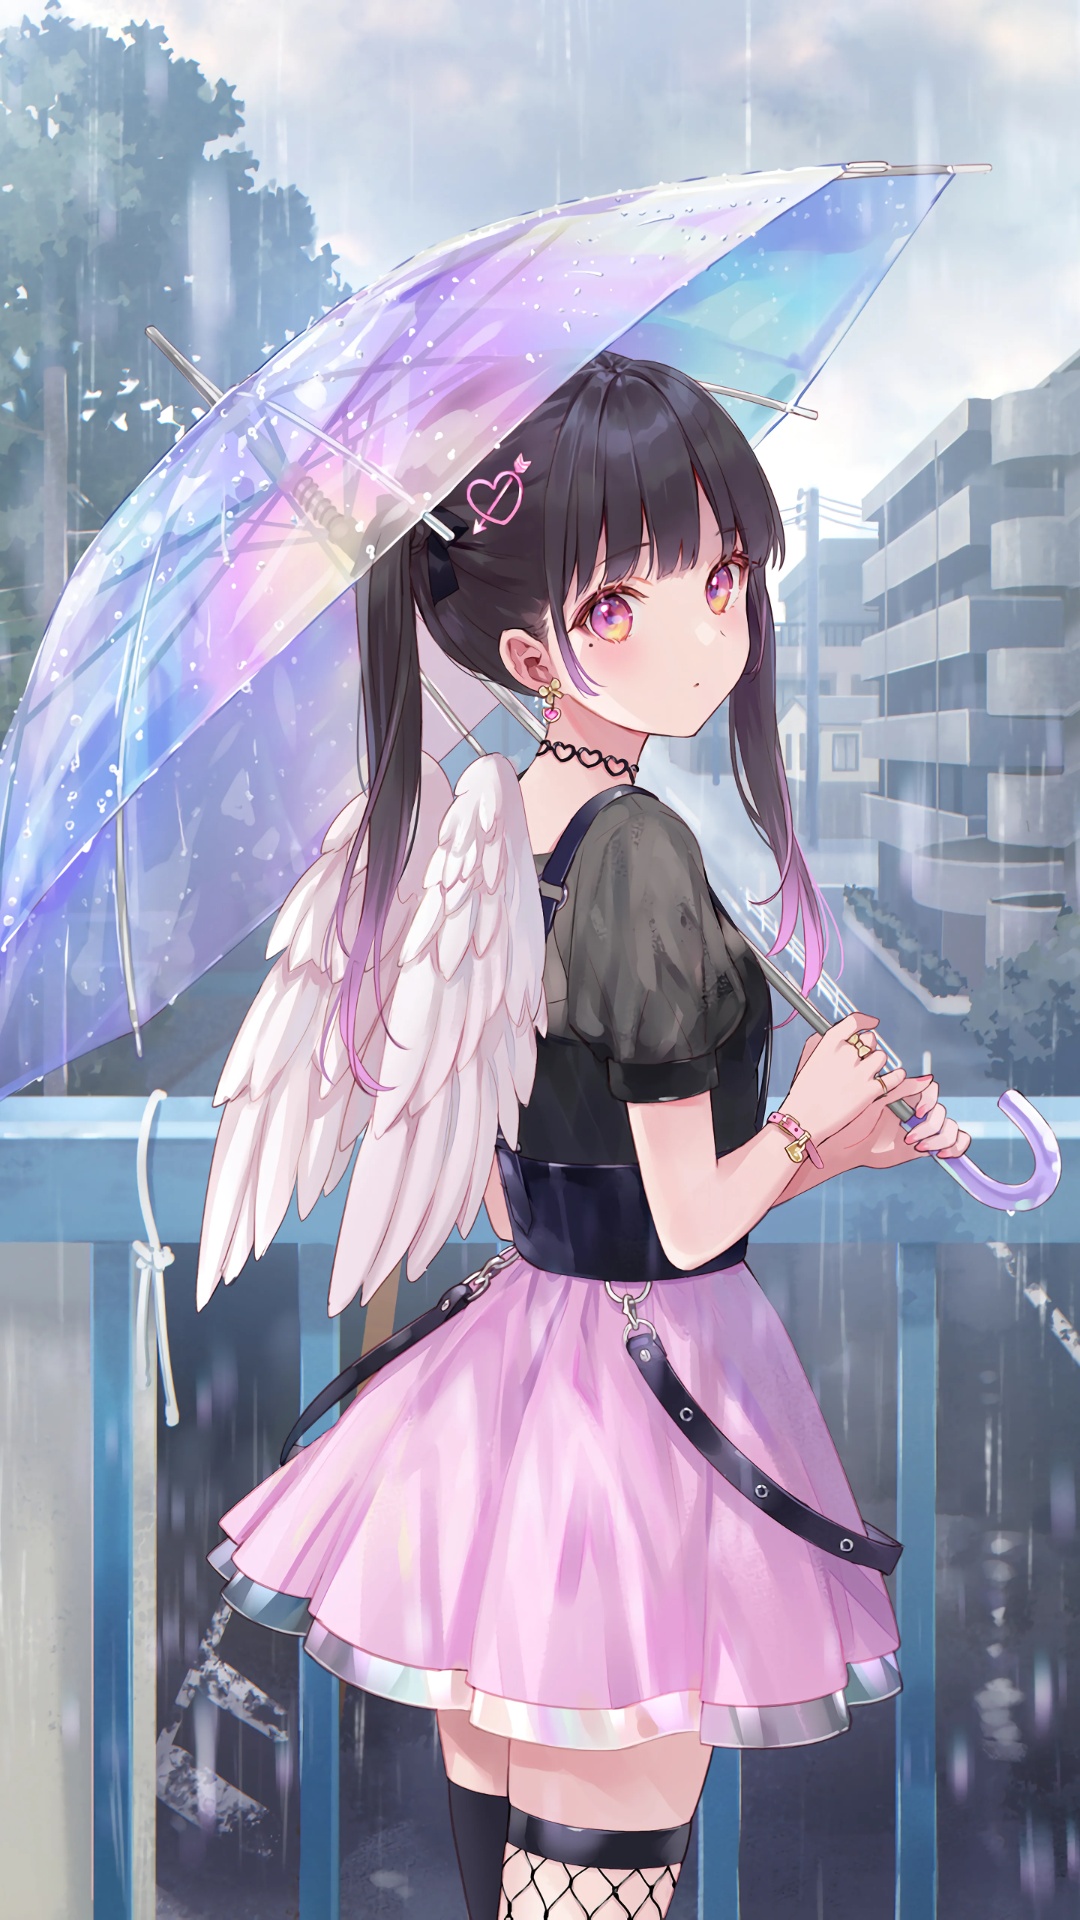 Anime Girl With Umbrella Wallpaper